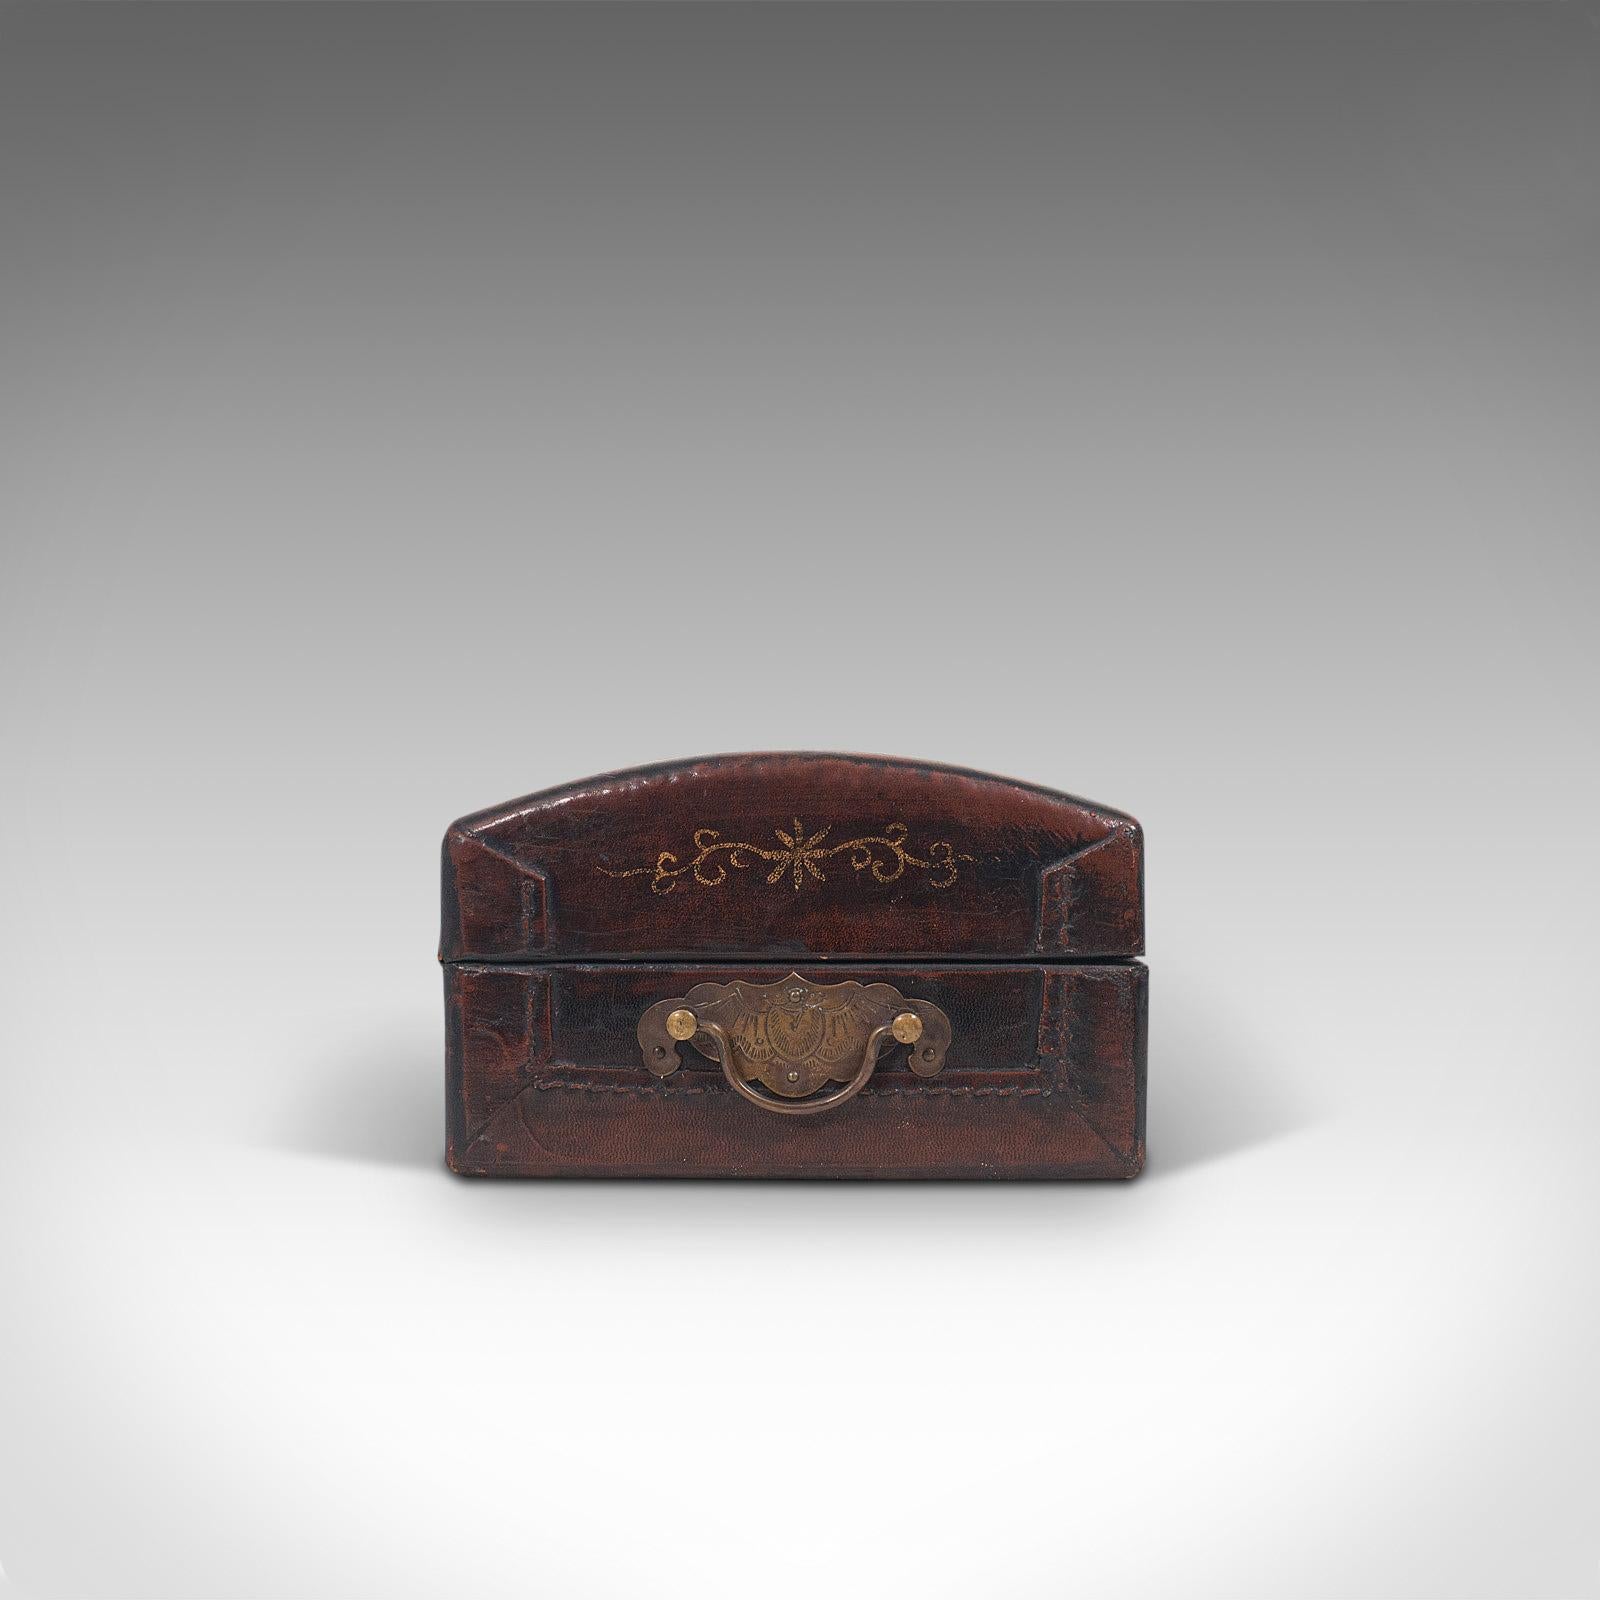 19th Century Antique Jewelry Box, Japanese, Leather, Desk Caddy, Meiji Period, circa 1900